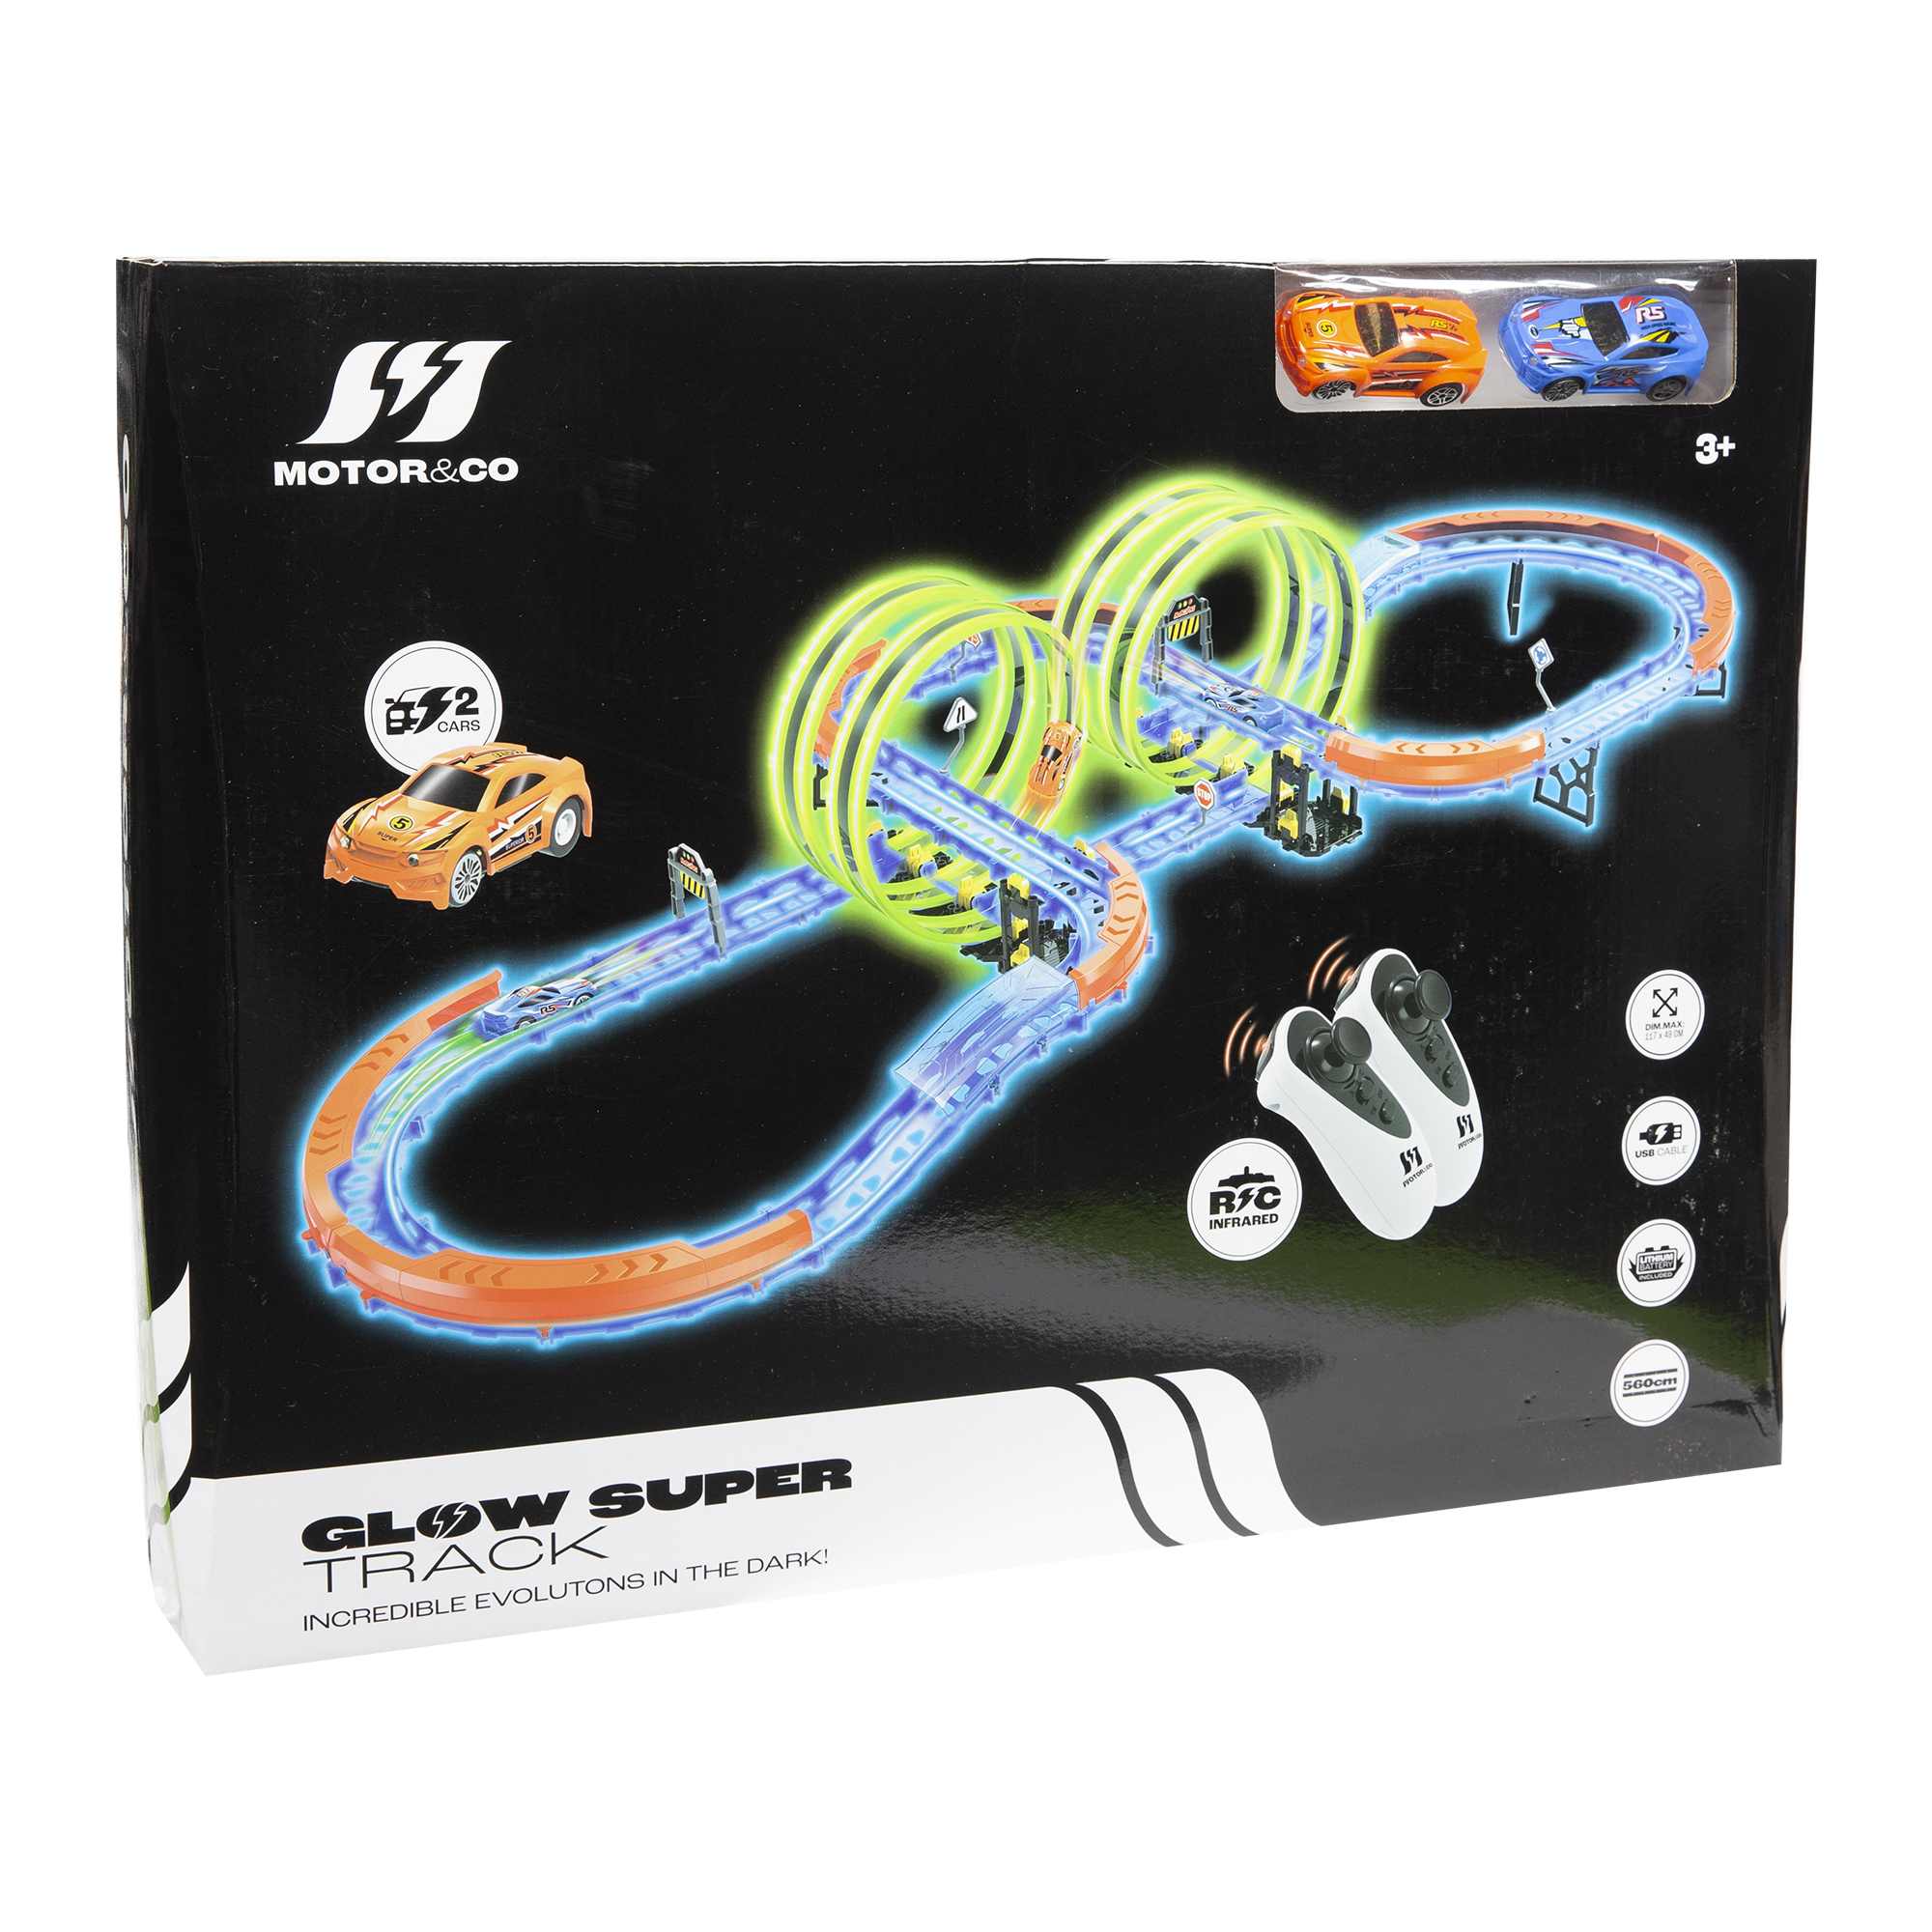 Glow super track - SUPERSTAR